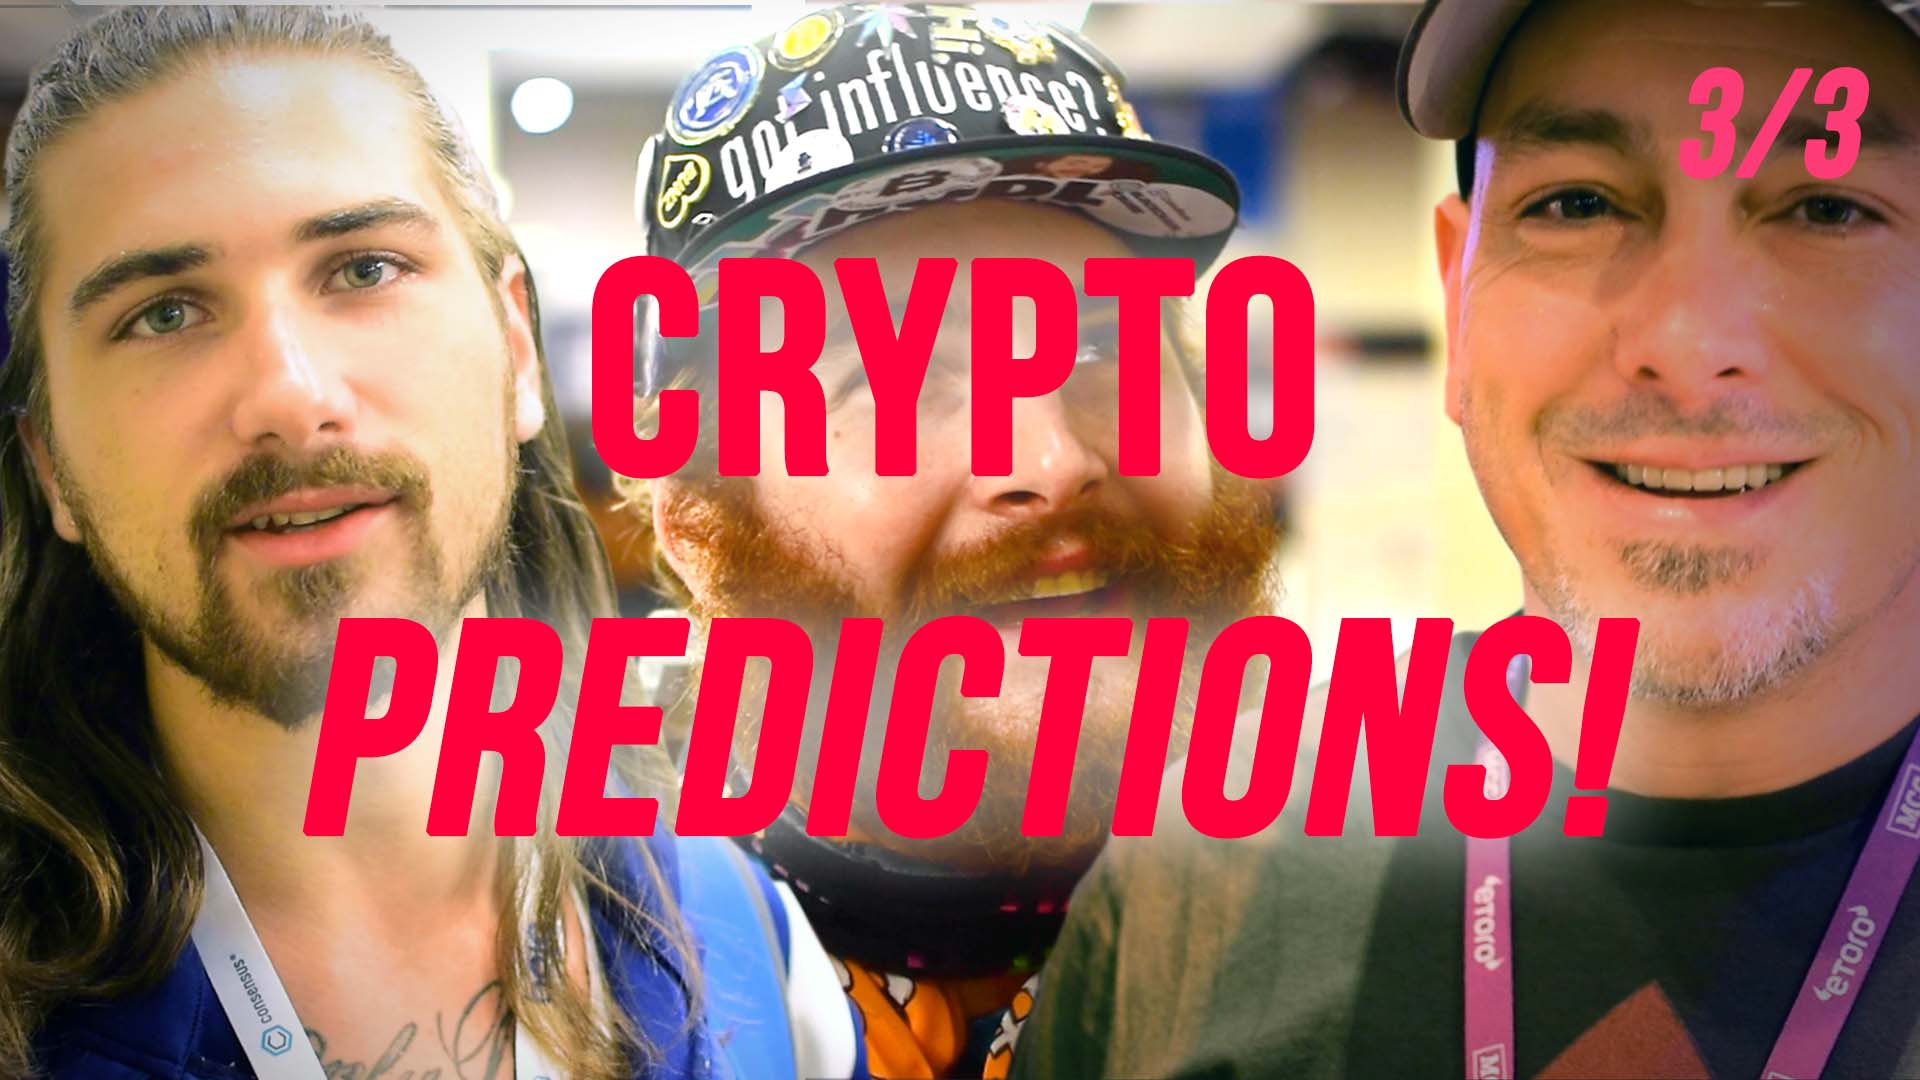 Crypto, Bitcoin Price and Adoption Prediction 2019 - Interviews